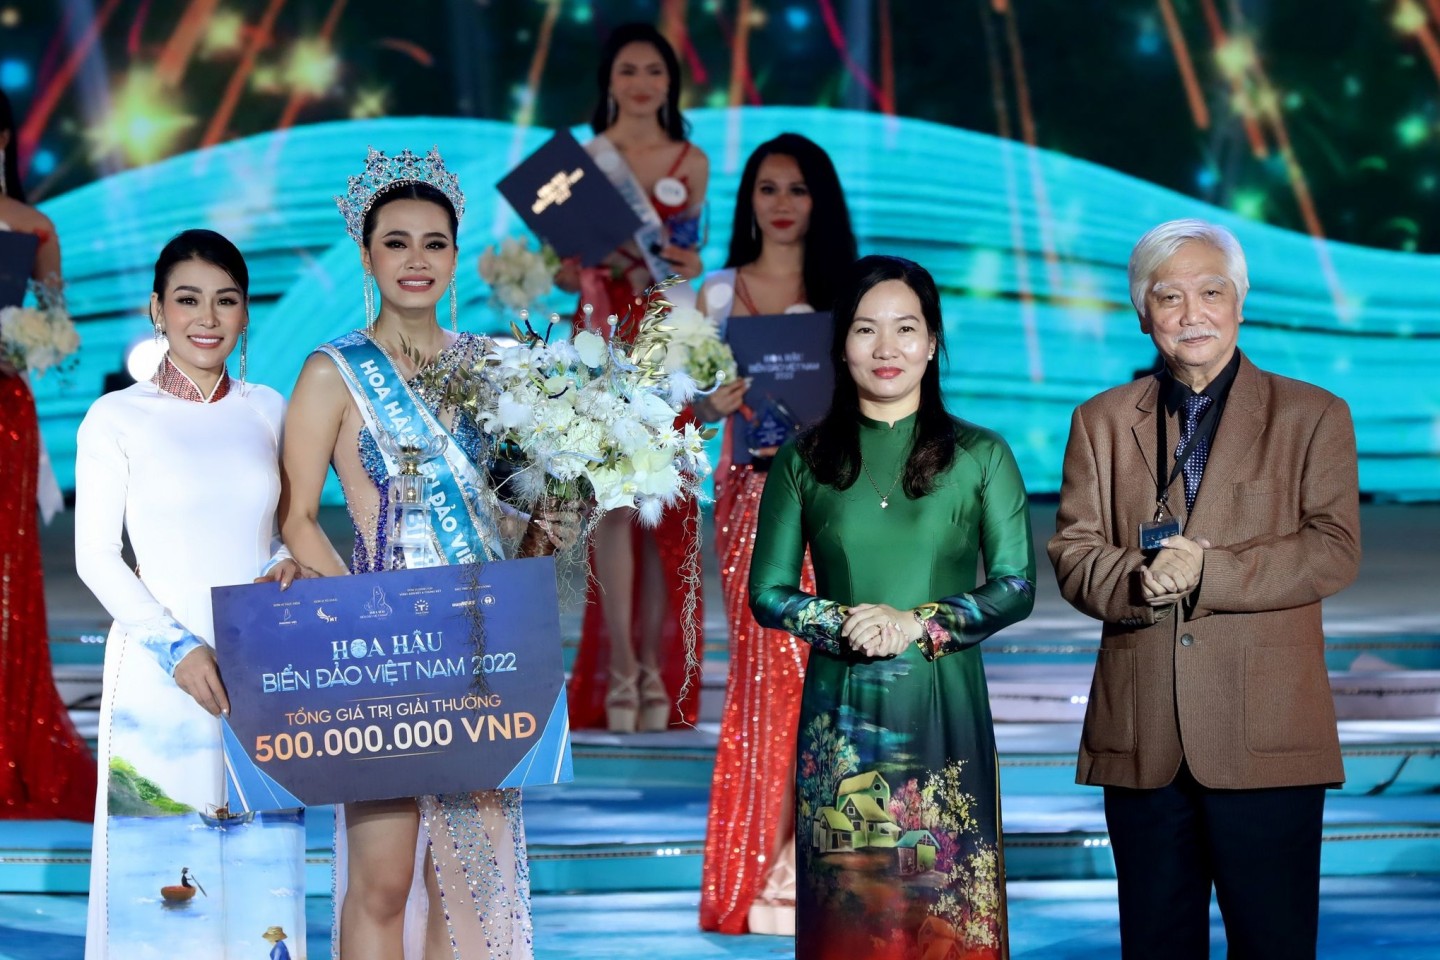 Dinh Nhu Phuong, 21, wird zur «Miss Sea and Island Vietnam 2022» gekrönt. Der Schönheitswettbewerb fand in Ha Long City in der Provinz Quang Ninh statt.